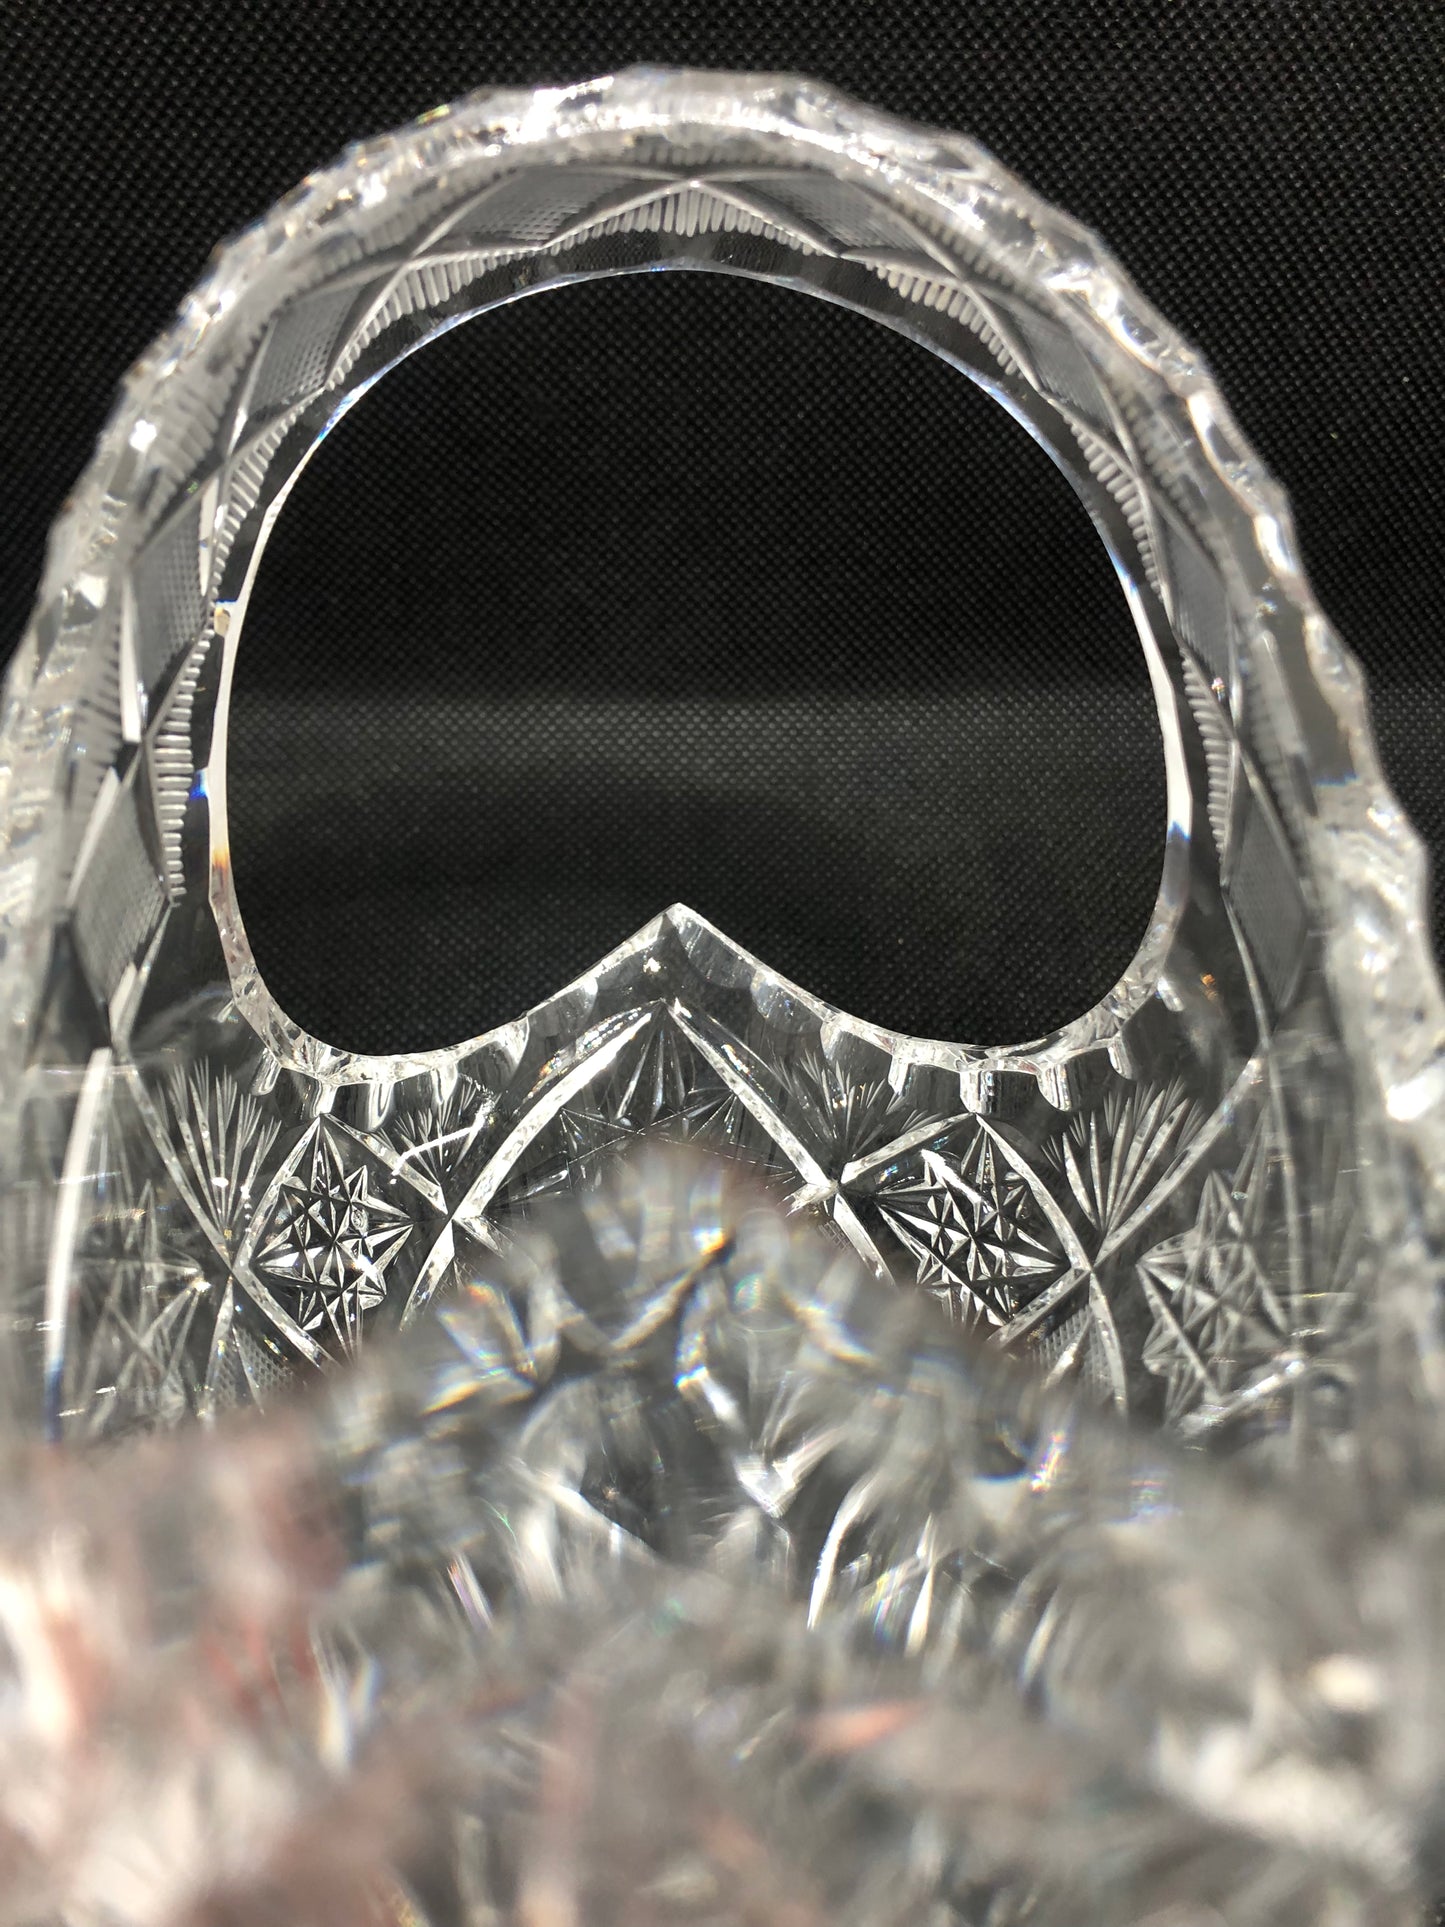 crystal vase handle close up 2